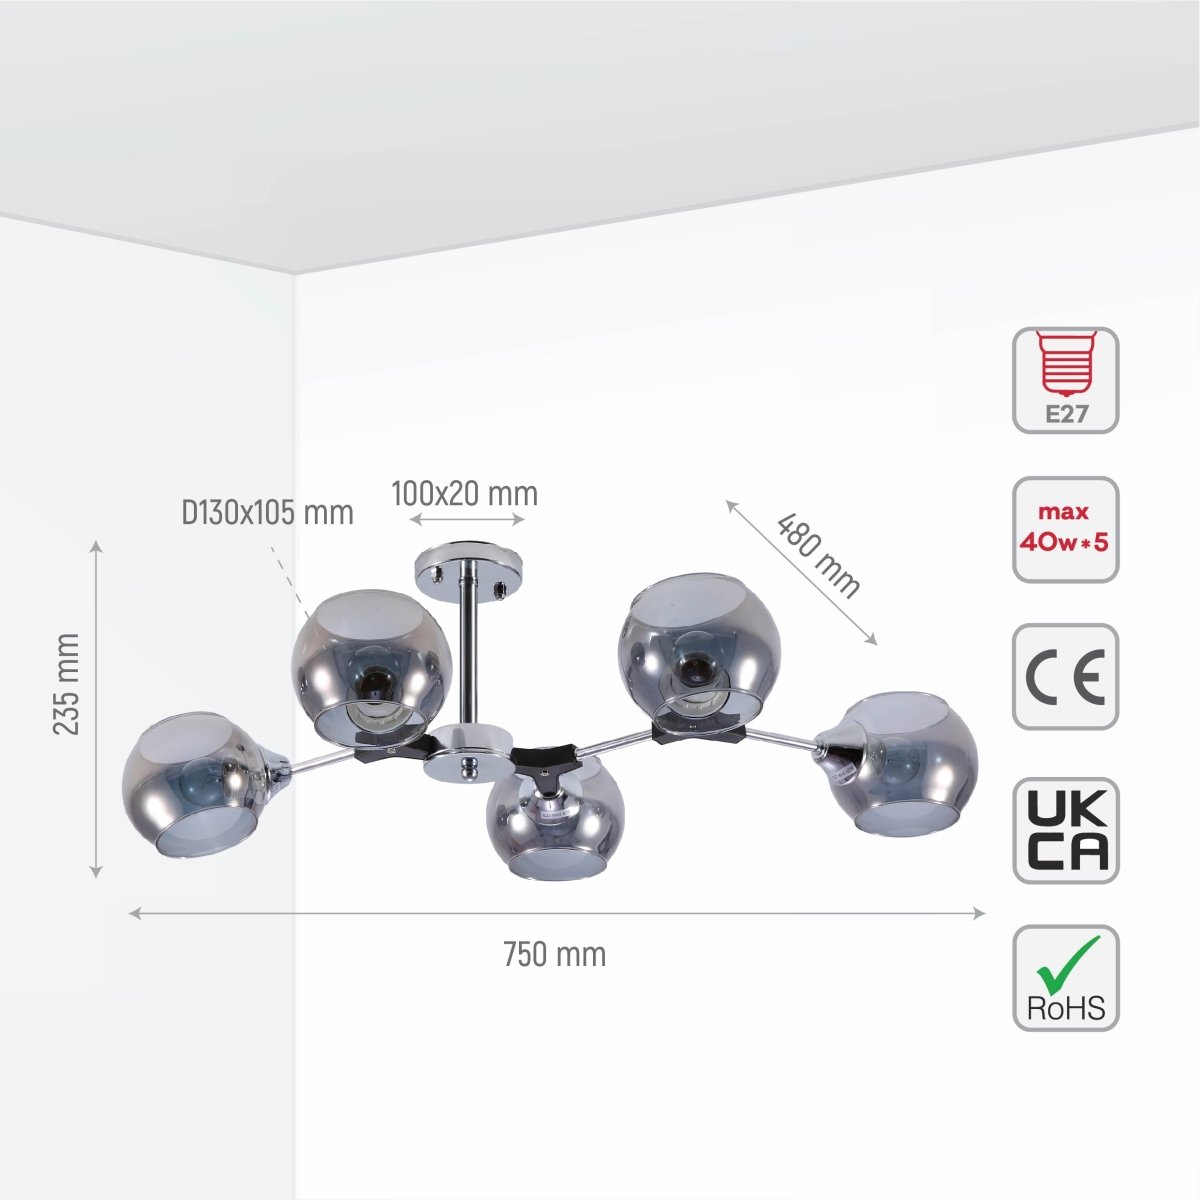 Size and specs of Smoky Barrel Glass Chrome Metal Body Sputnik Modern Ceiling Light with E27 Fittings | TEKLED 159-17694